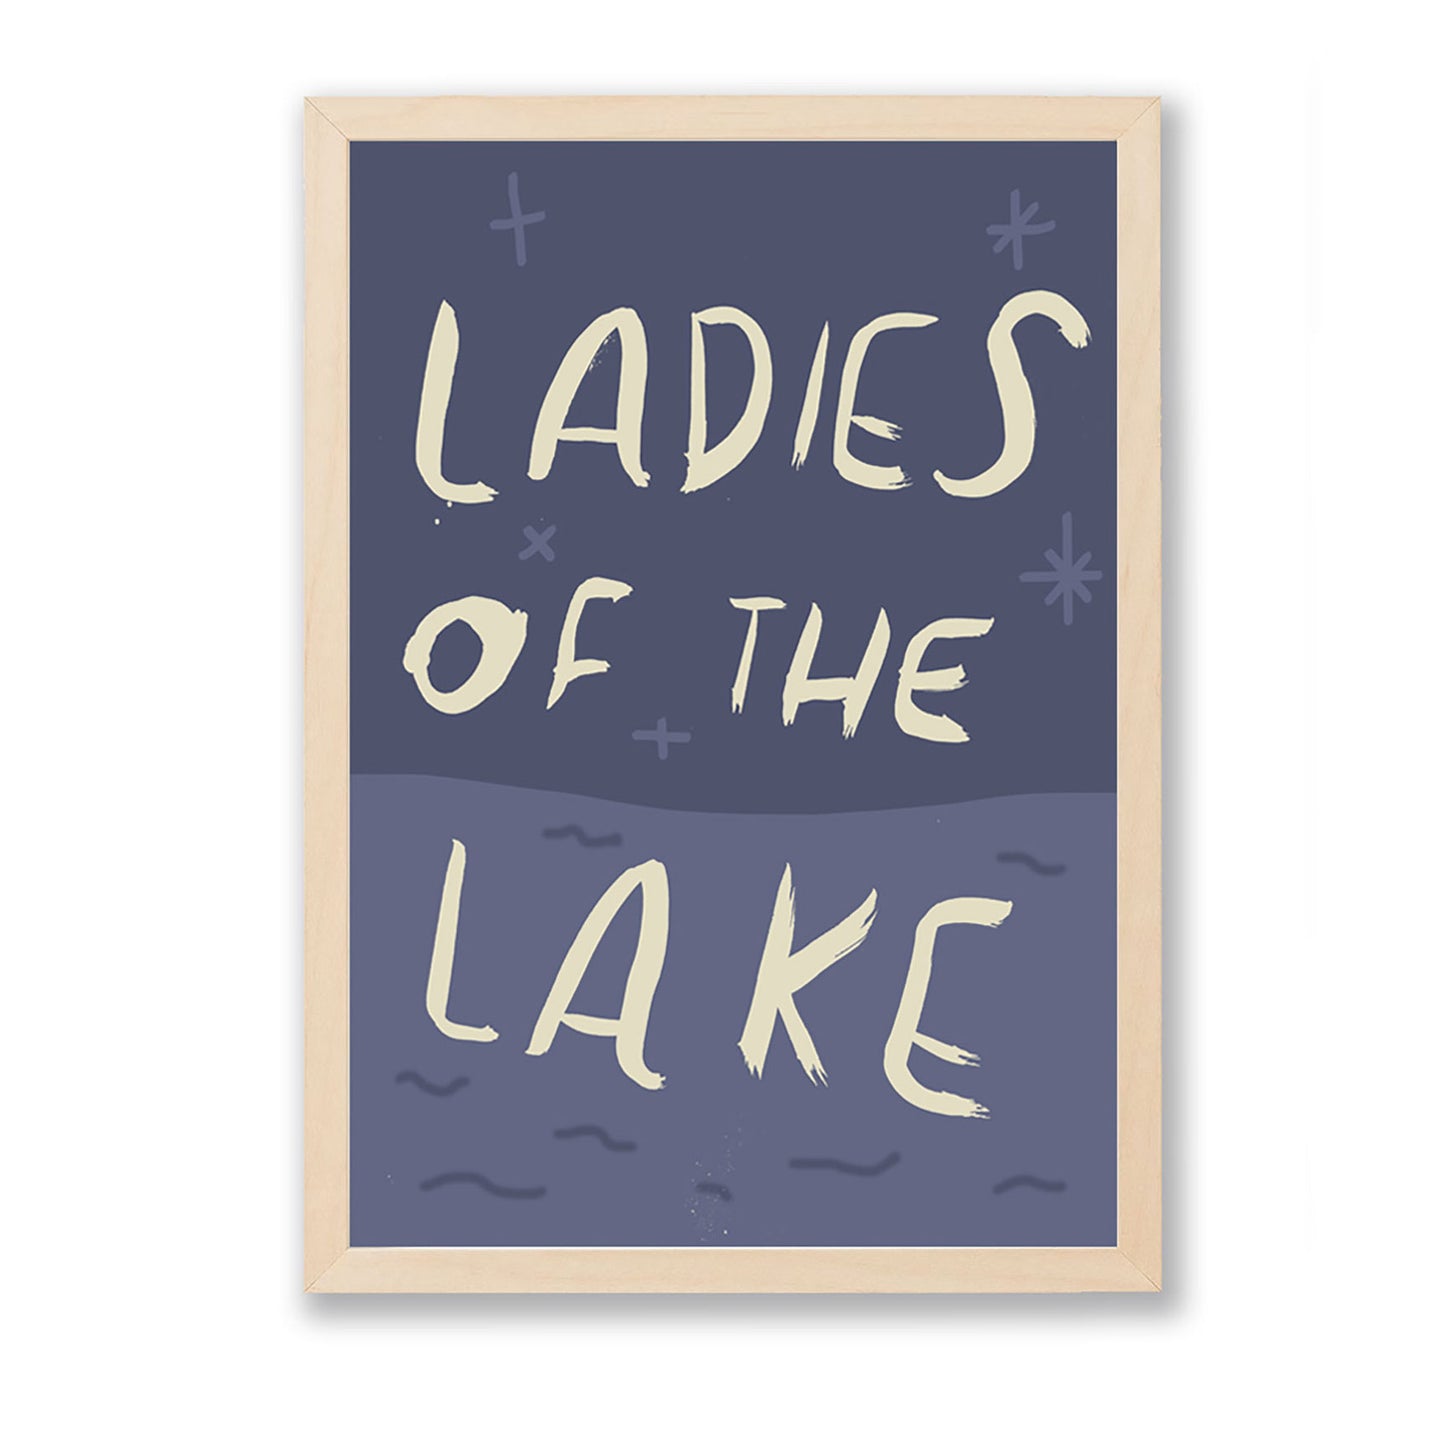 Ladies of the Lake print